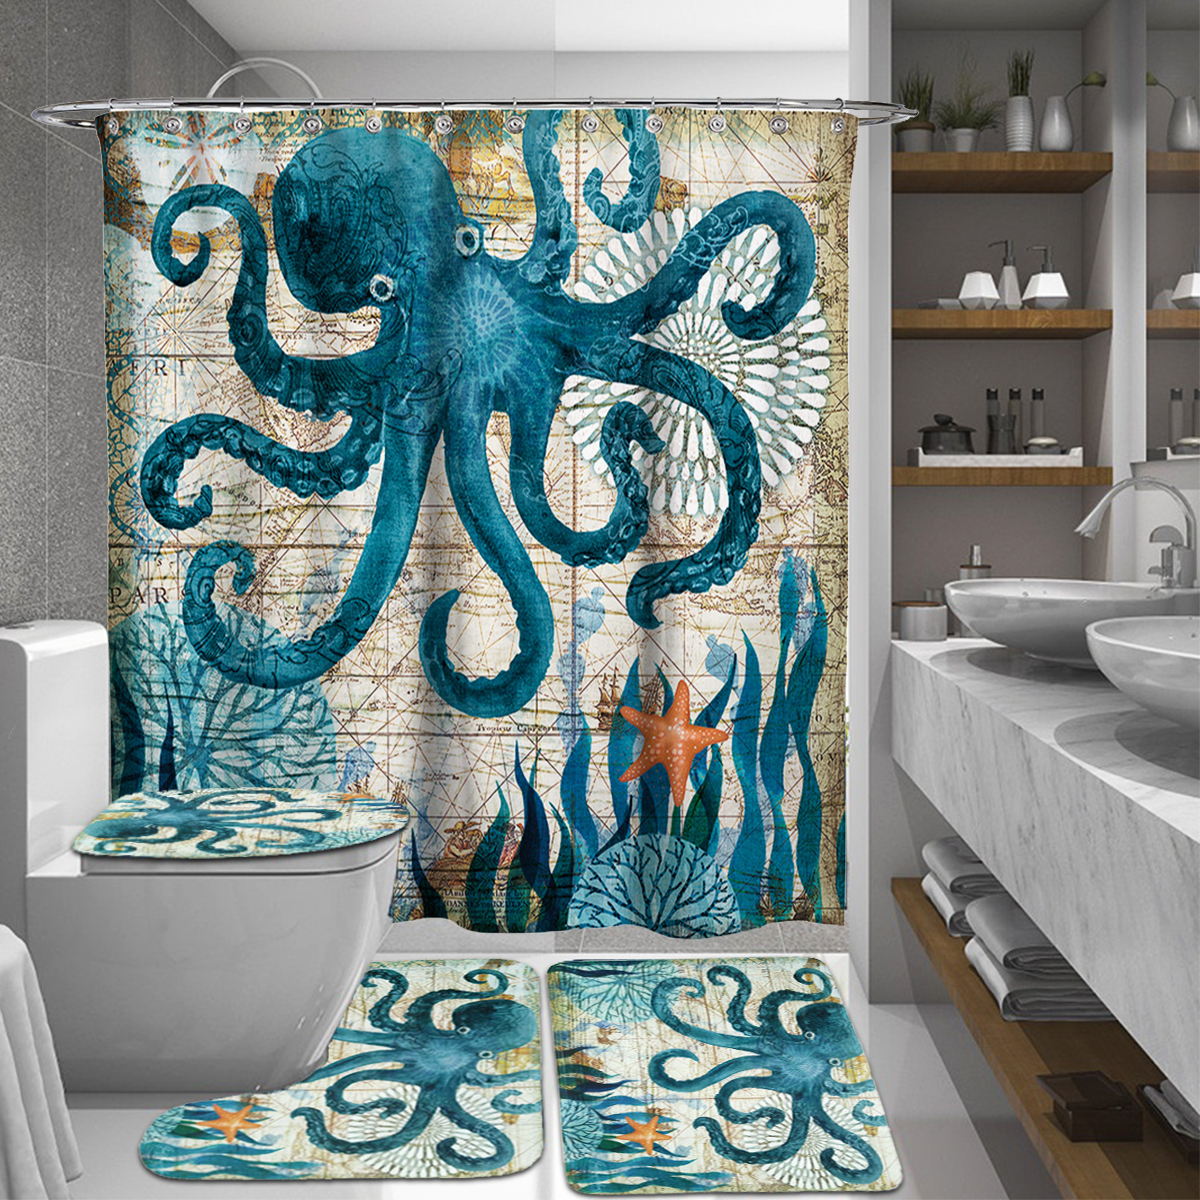 165 180cm Octopus Waterproof Bathroom, C Shaped Shower Curtain Hooks